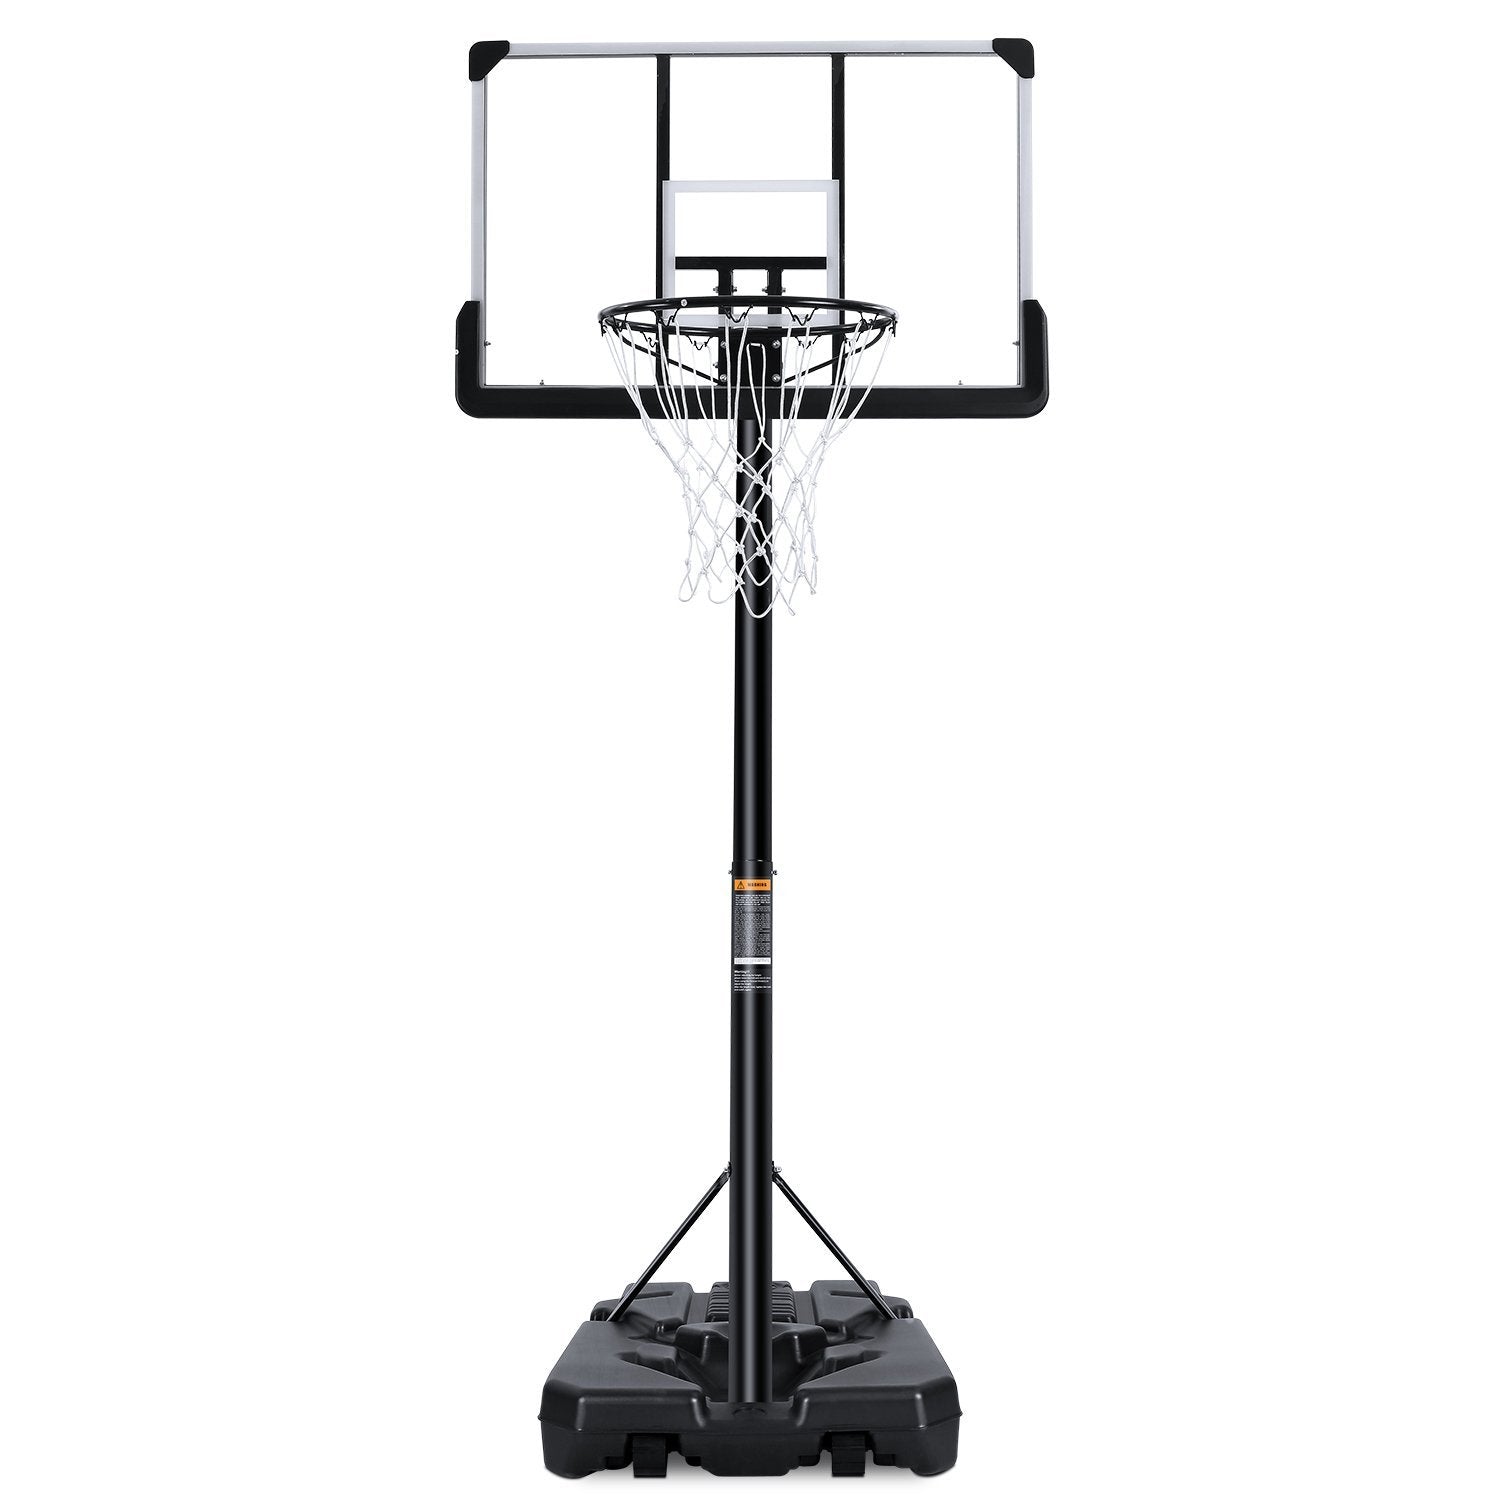 Basketball Hoop Rim Diameter vs Ball Size (Comparison) - The Stadiums Guide